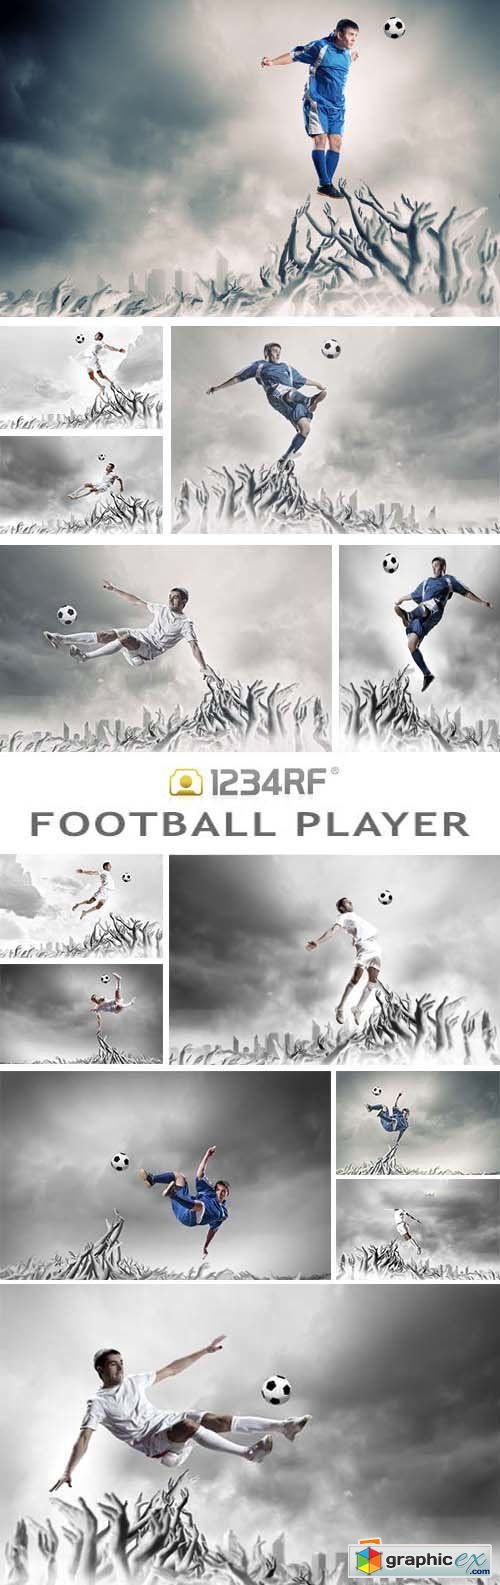 Football Player In Jump - 26xJPG